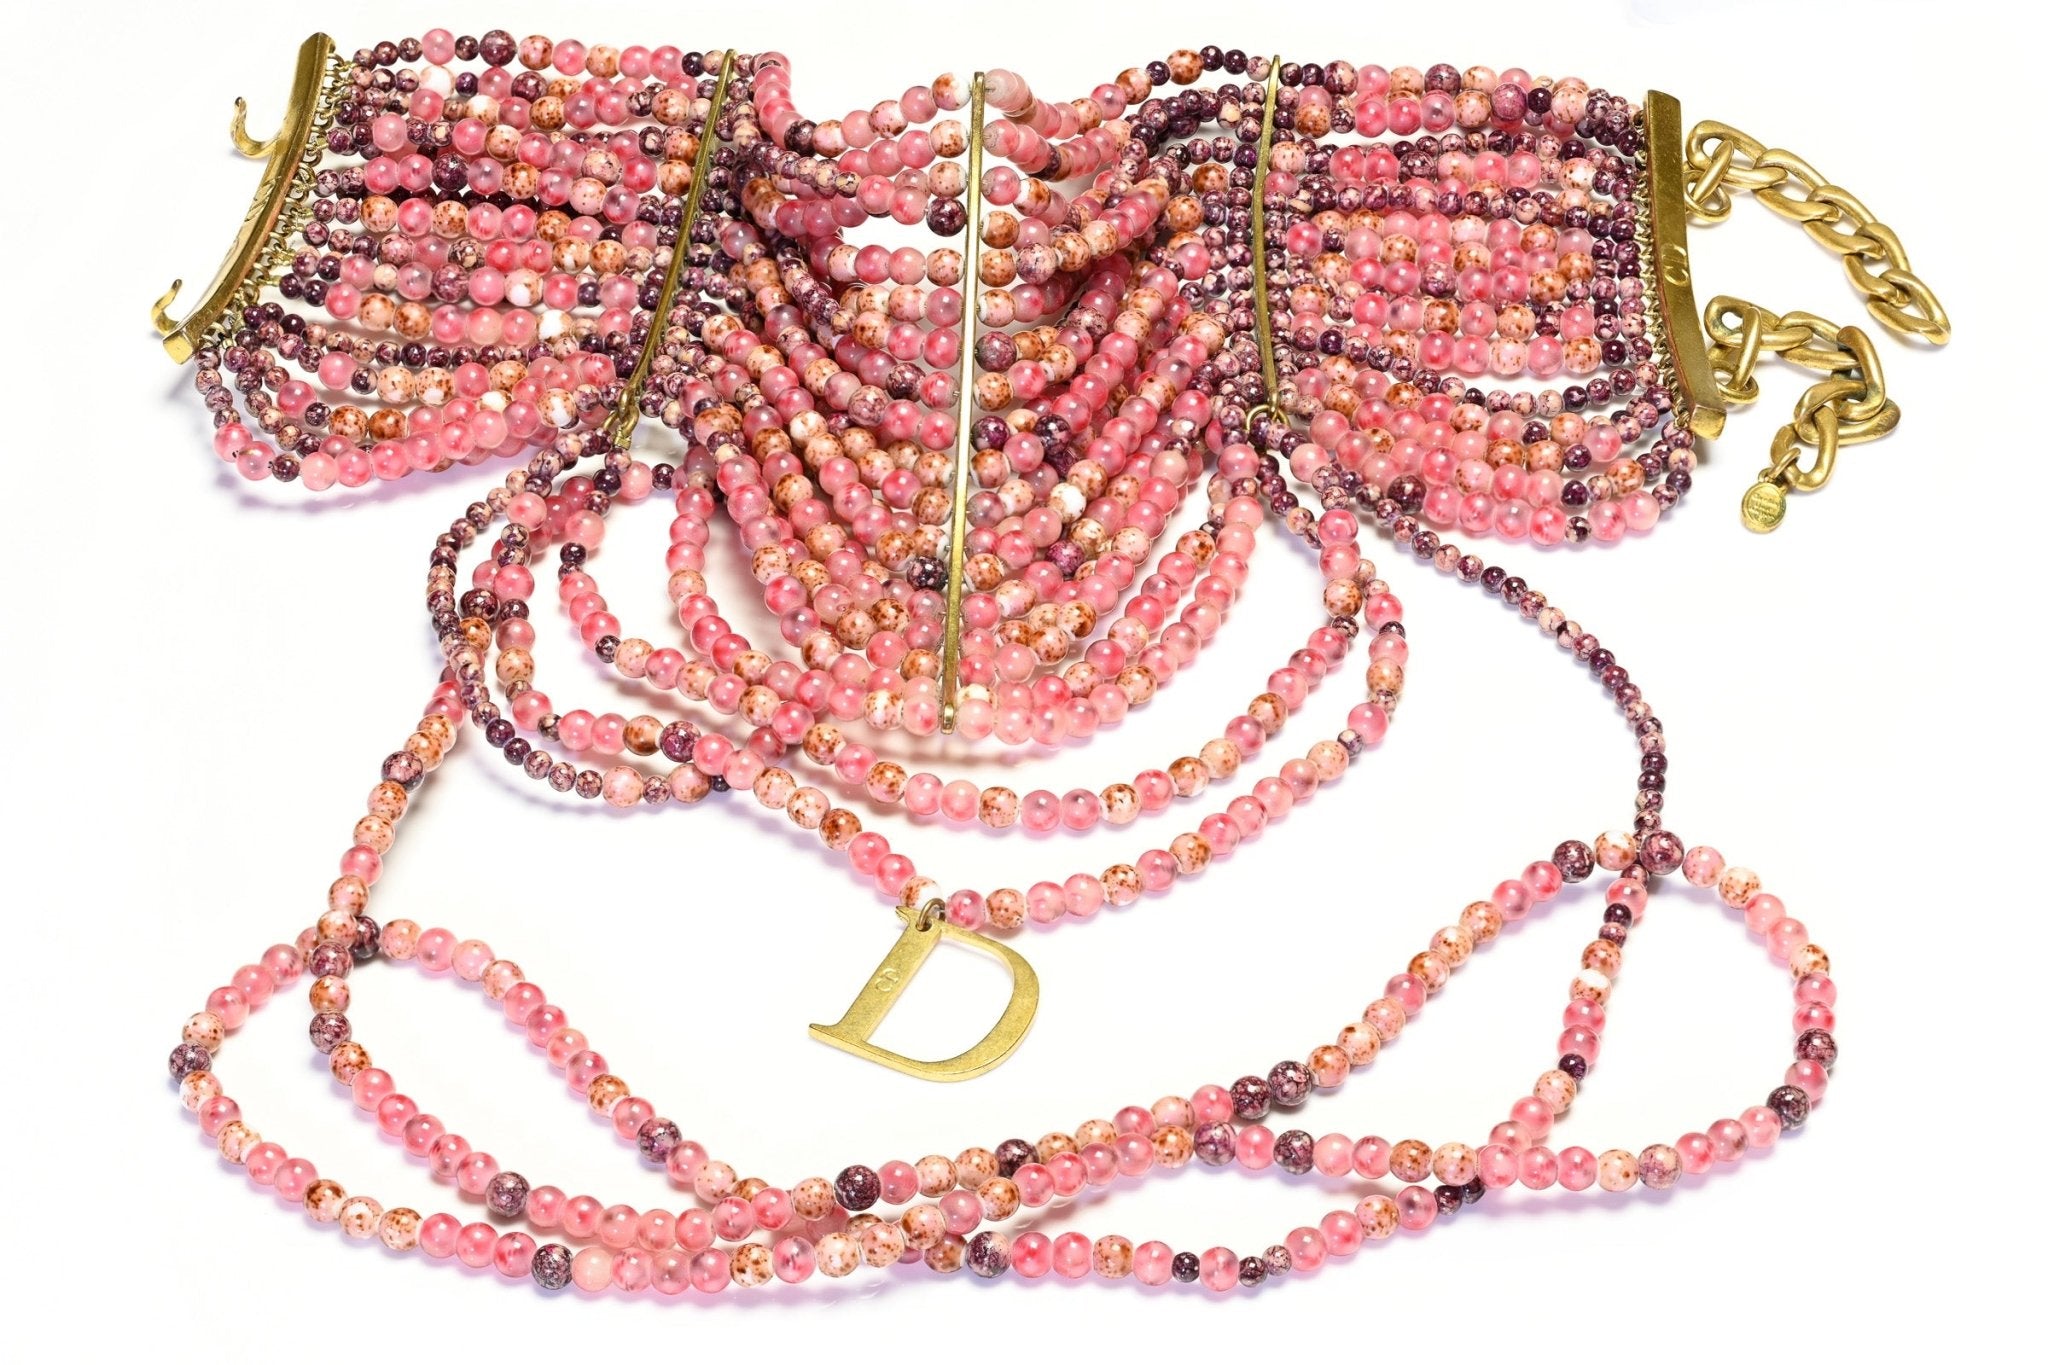 Christian Dior Couture 1998 Galliano Pink Glass Beads Masai Maasai Choker Necklace